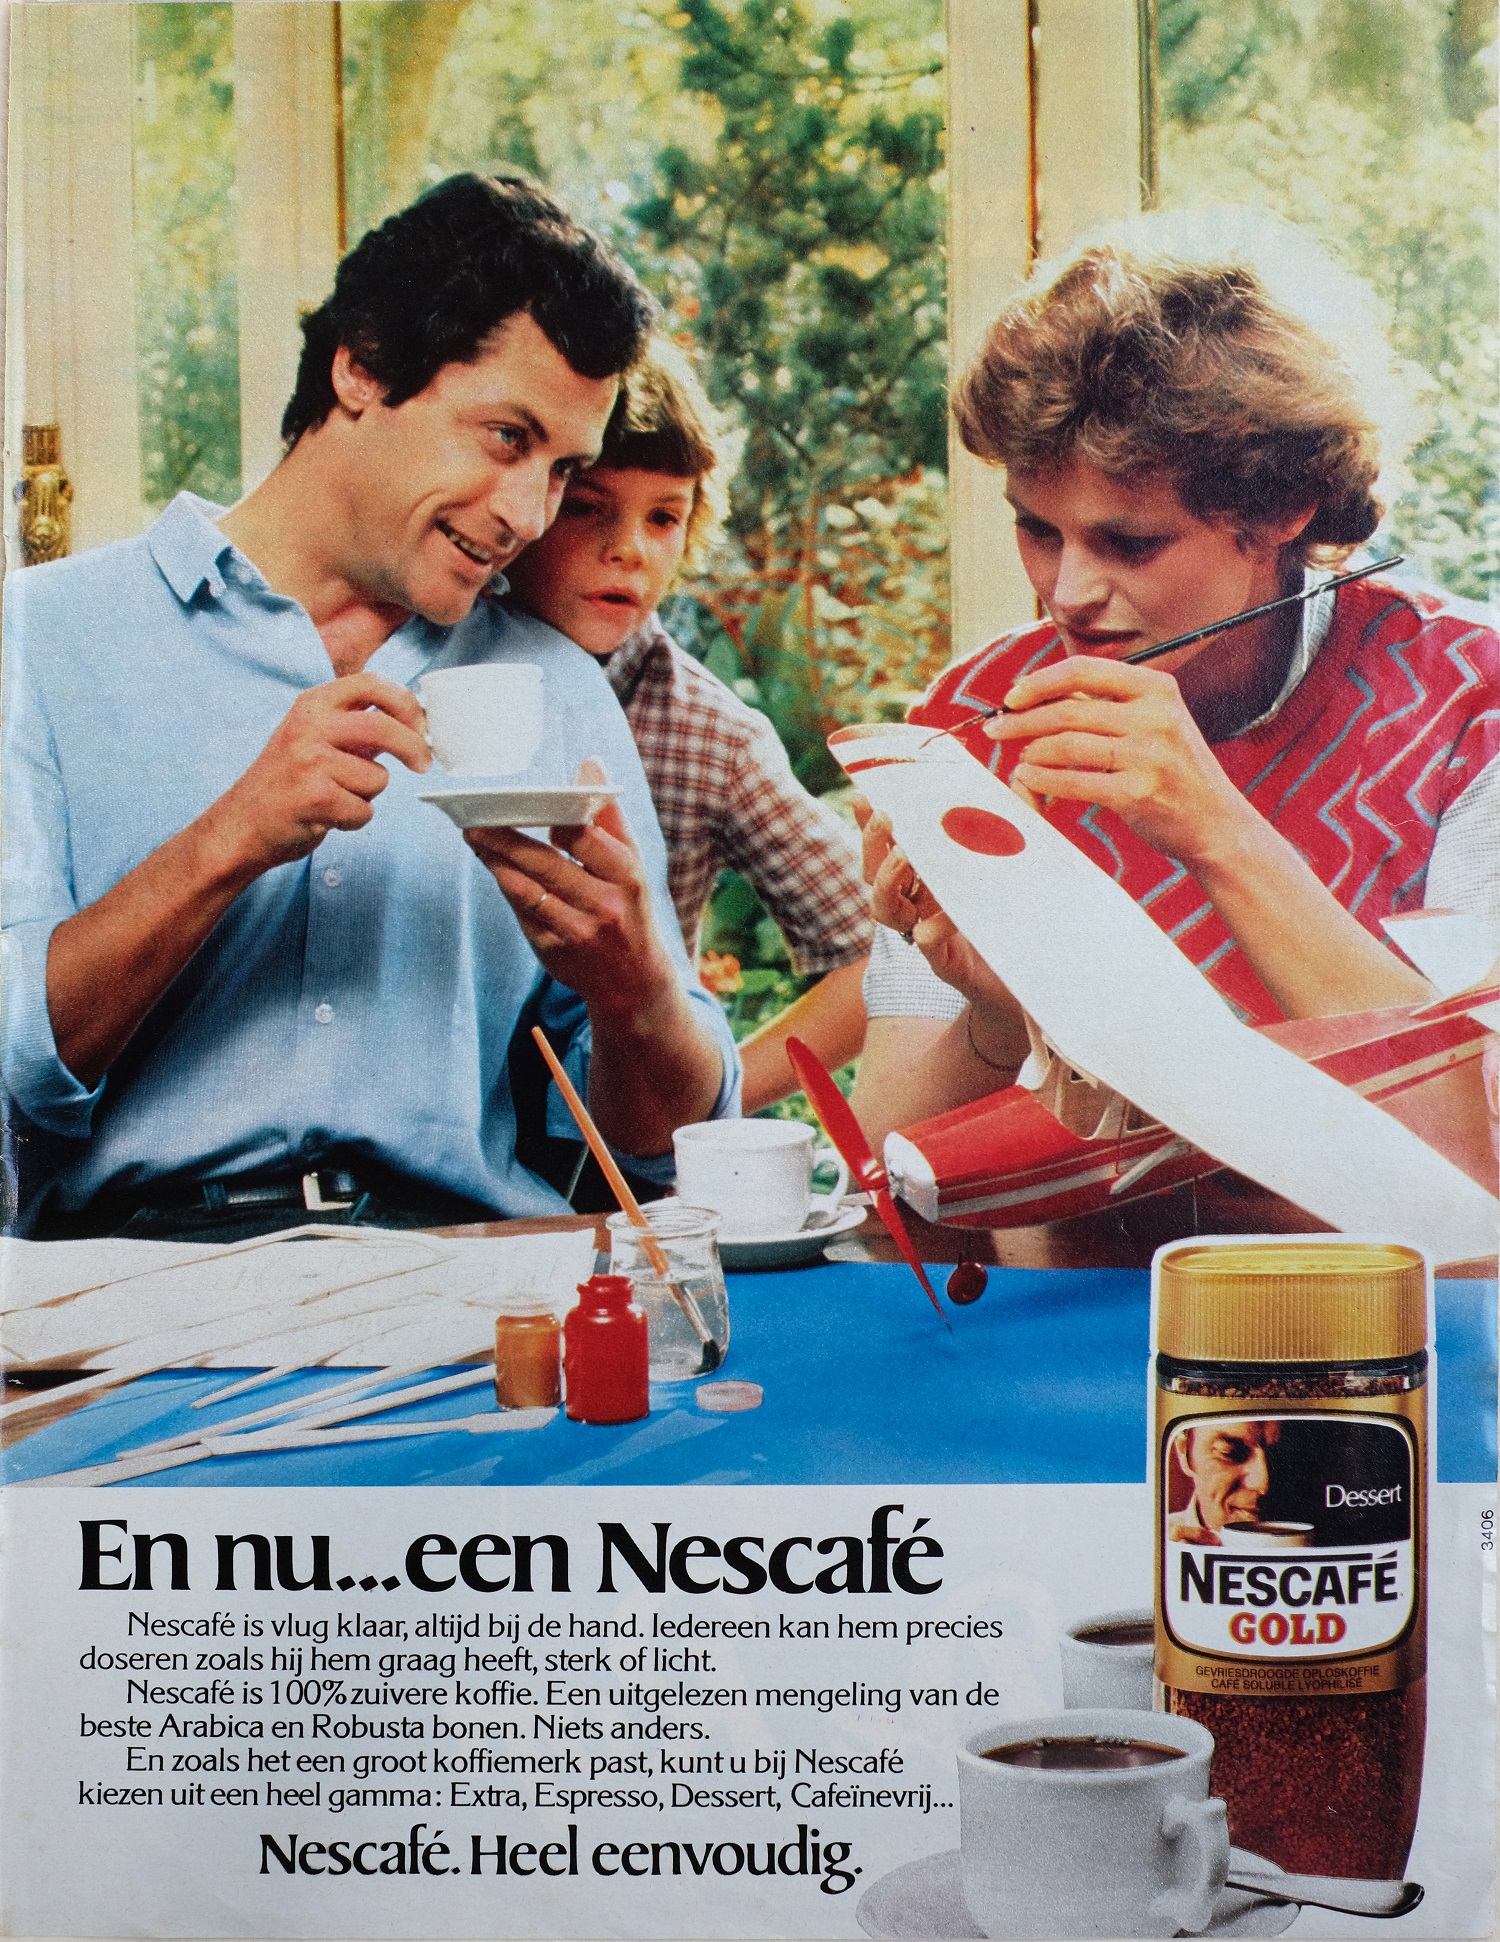 Nescafé reclame. Collectie Chris Lievens.